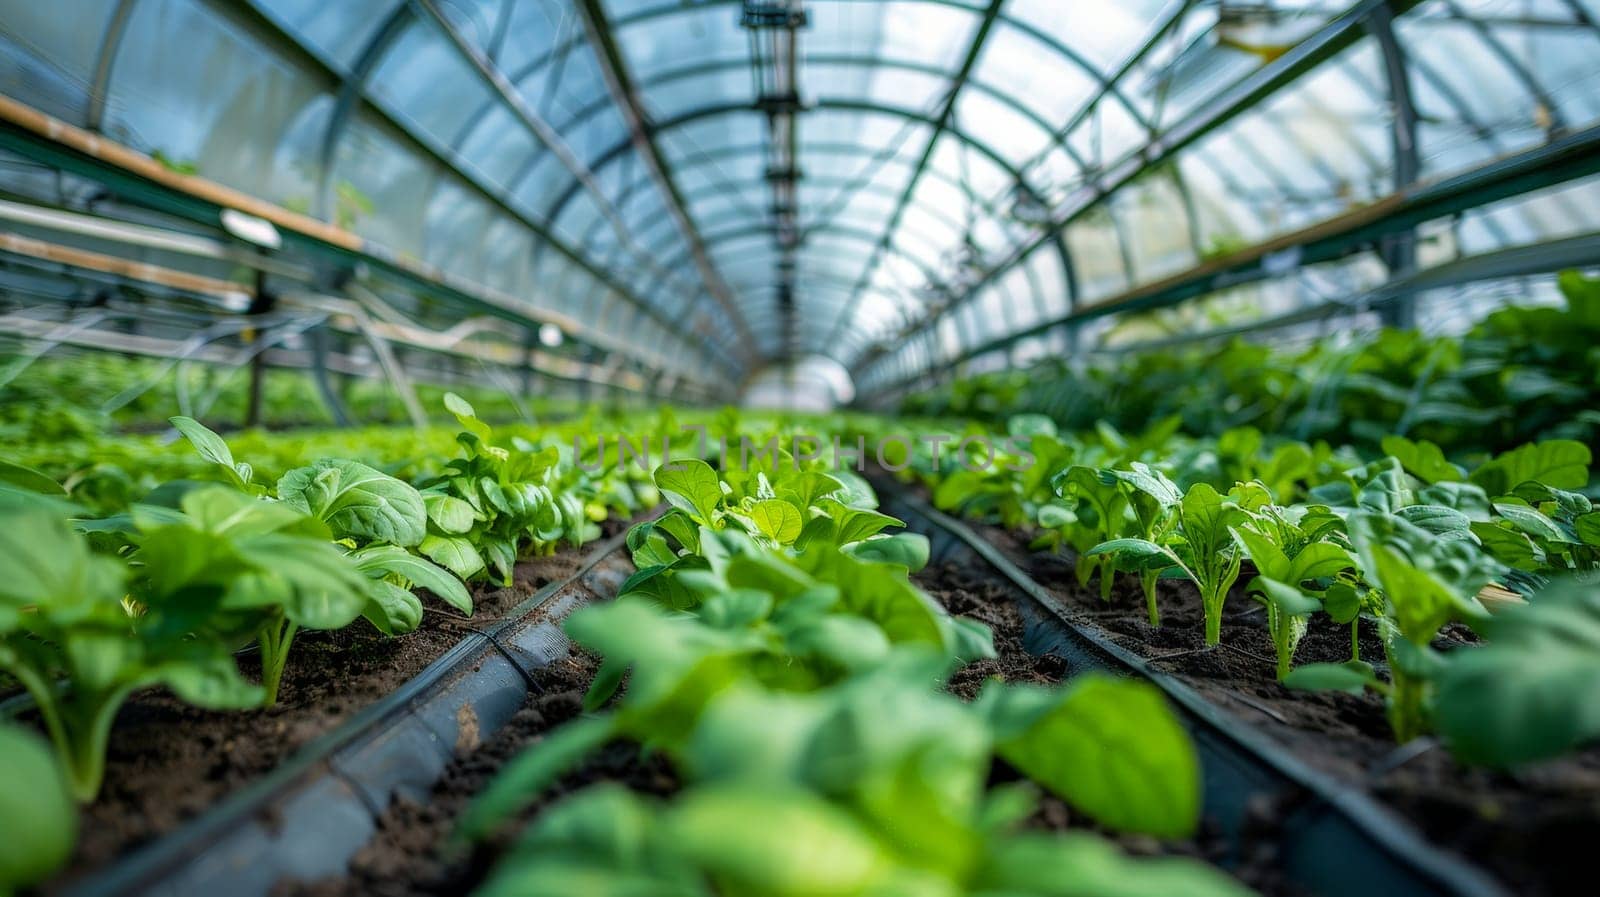 A modern greenhouse filled with veggies, A greenhouse filled with rows of genetically modified plants by nijieimu